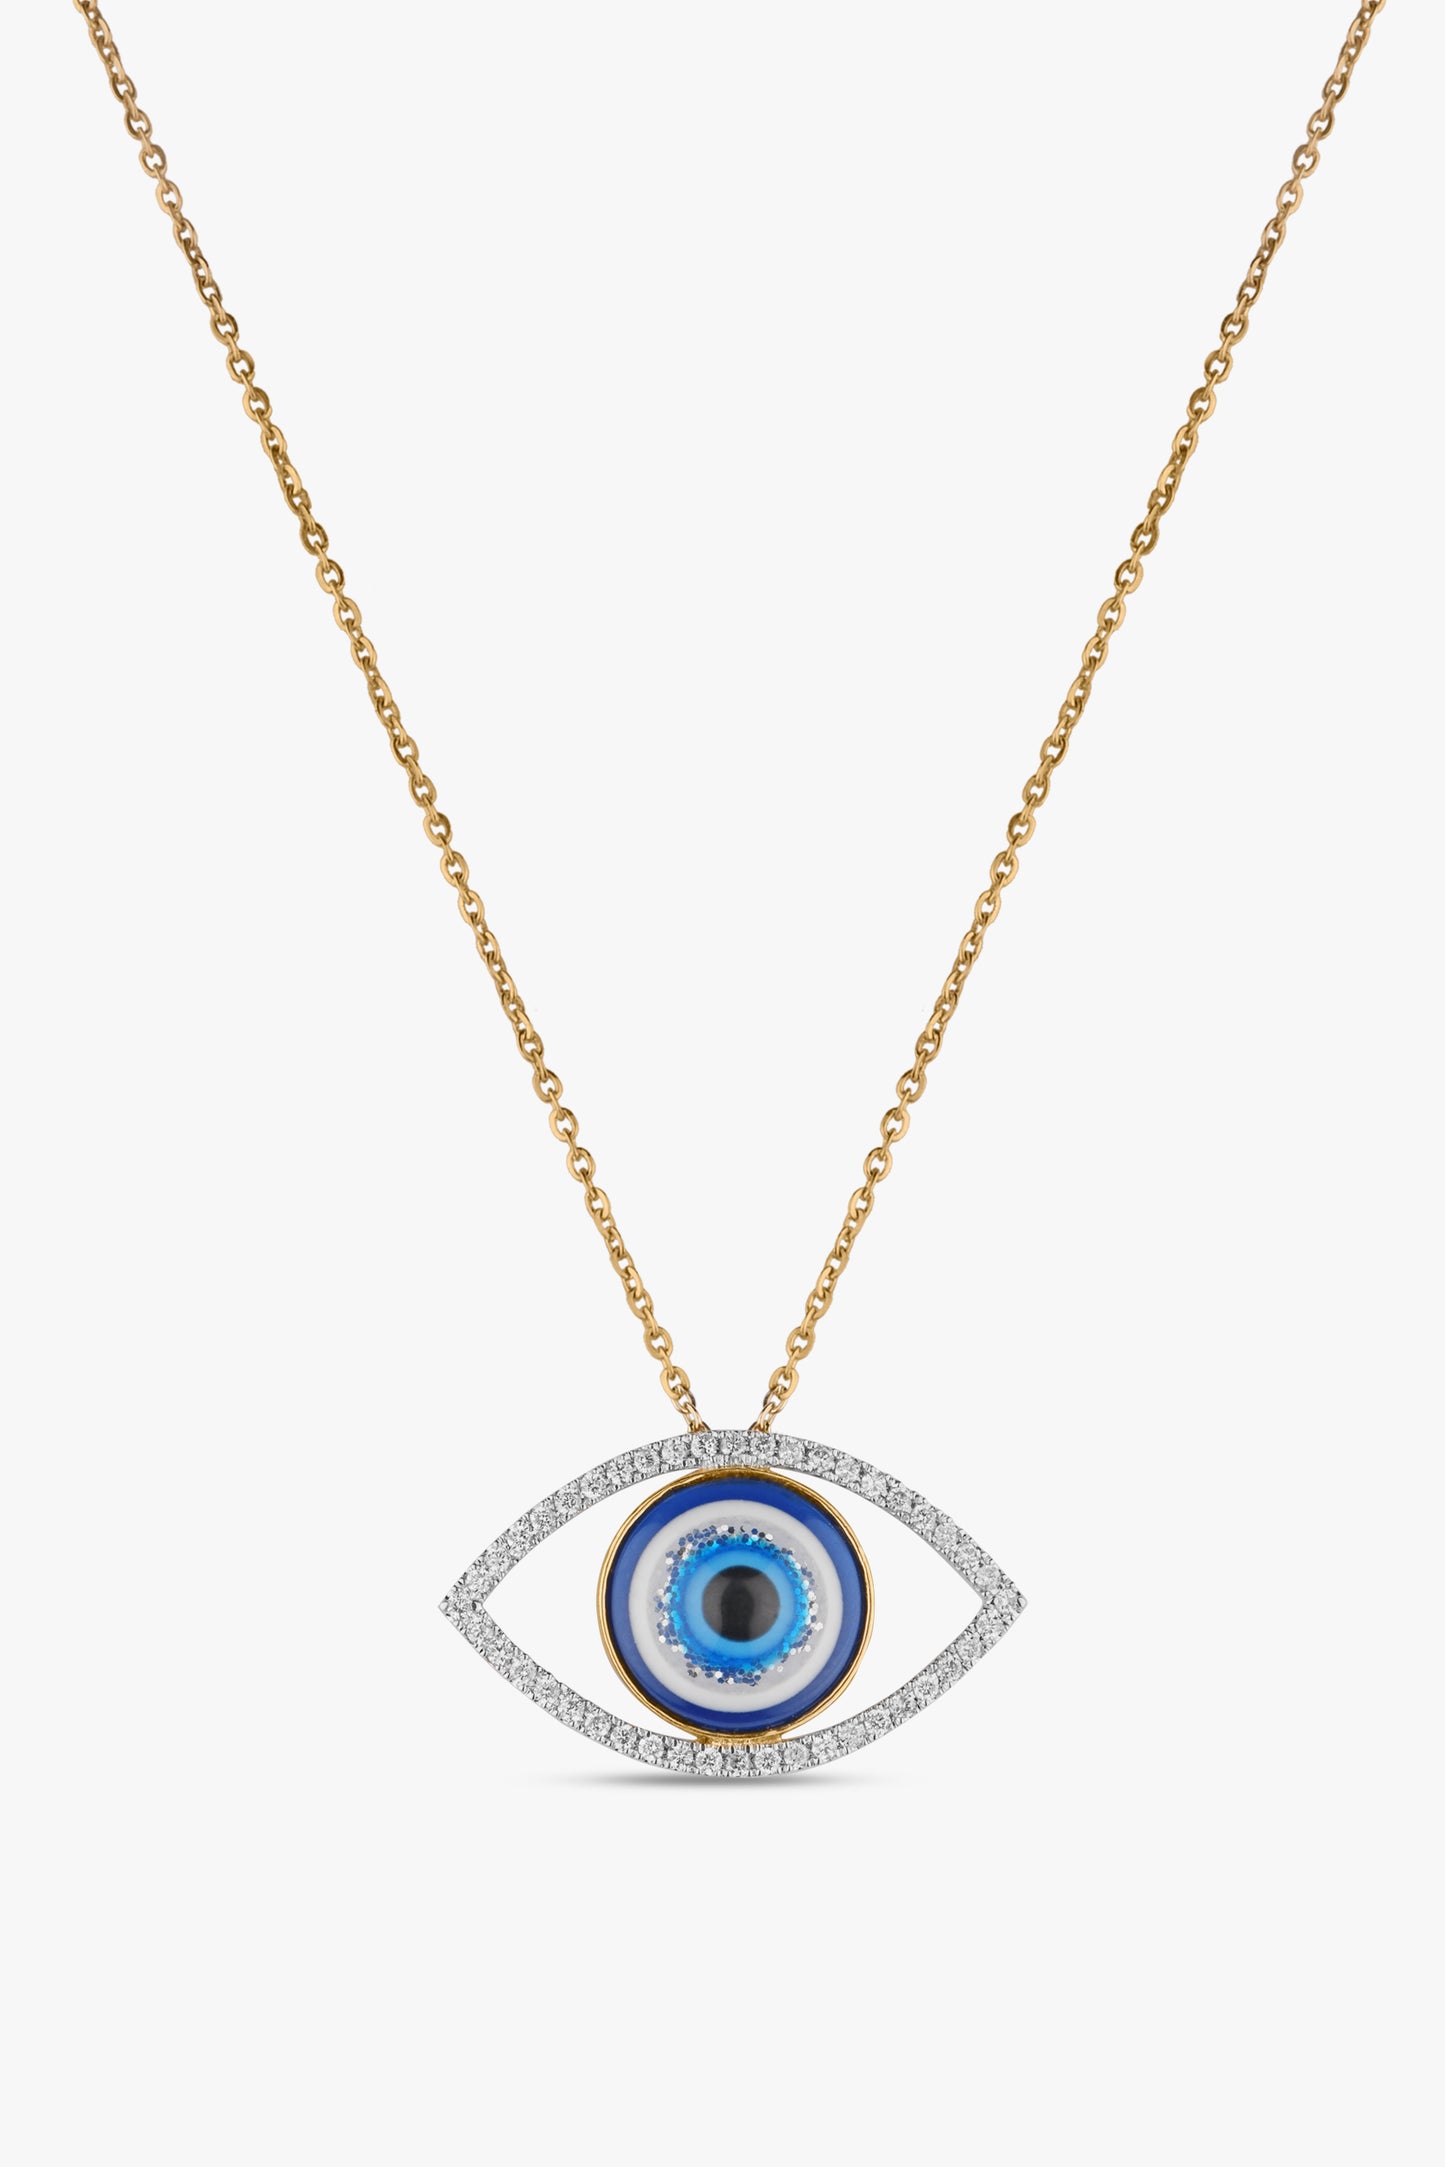 Blue Evil Eye Necklace Large